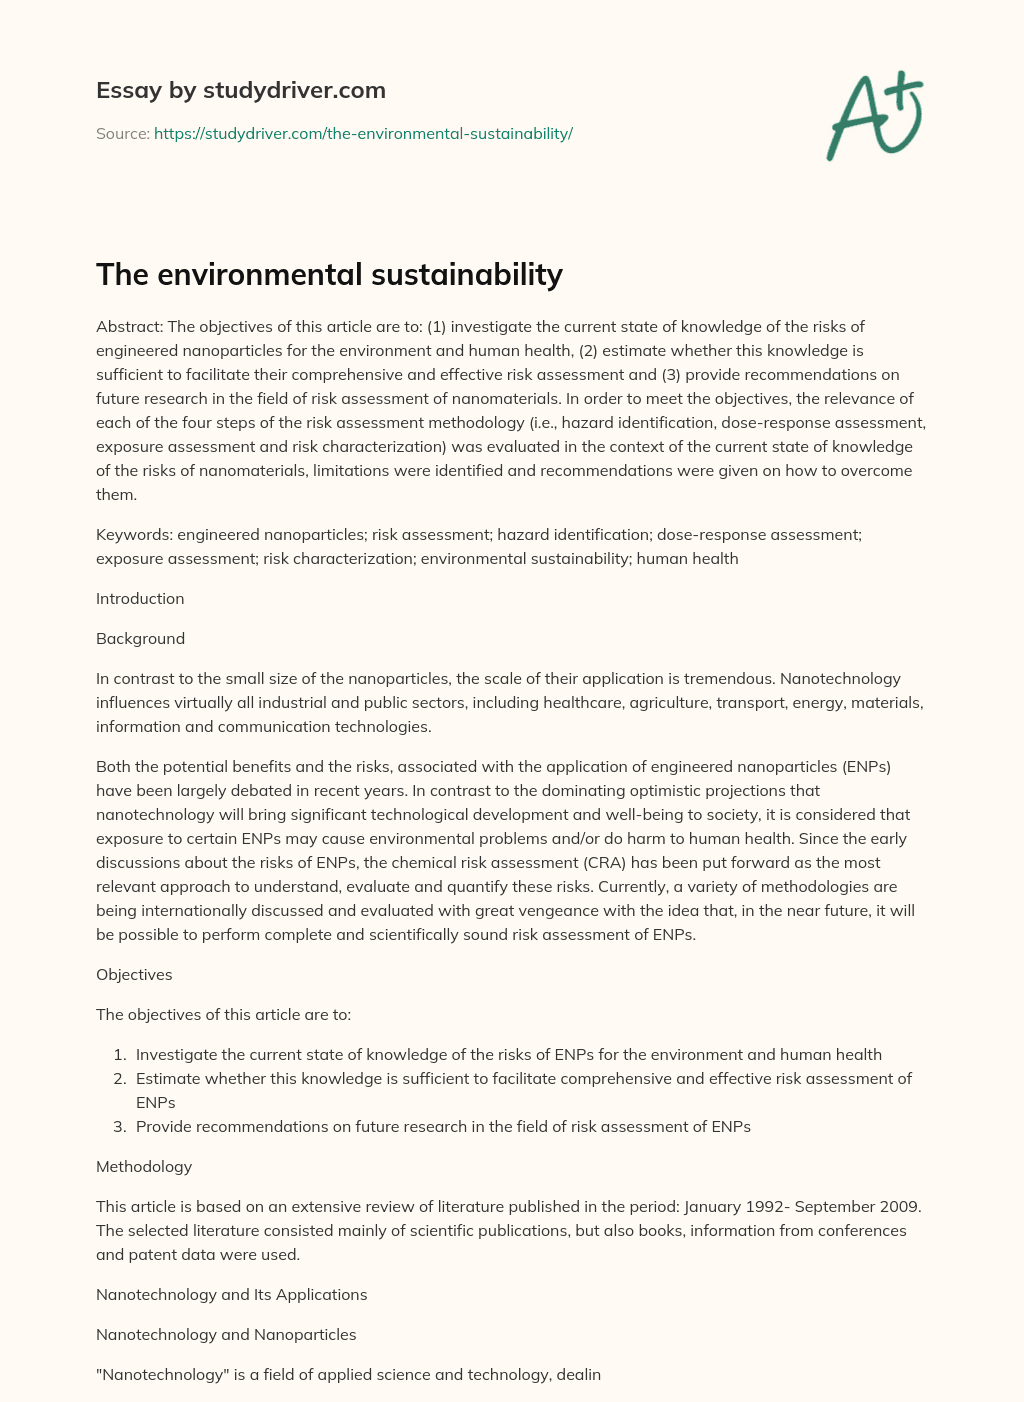 The Environmental Sustainability essay